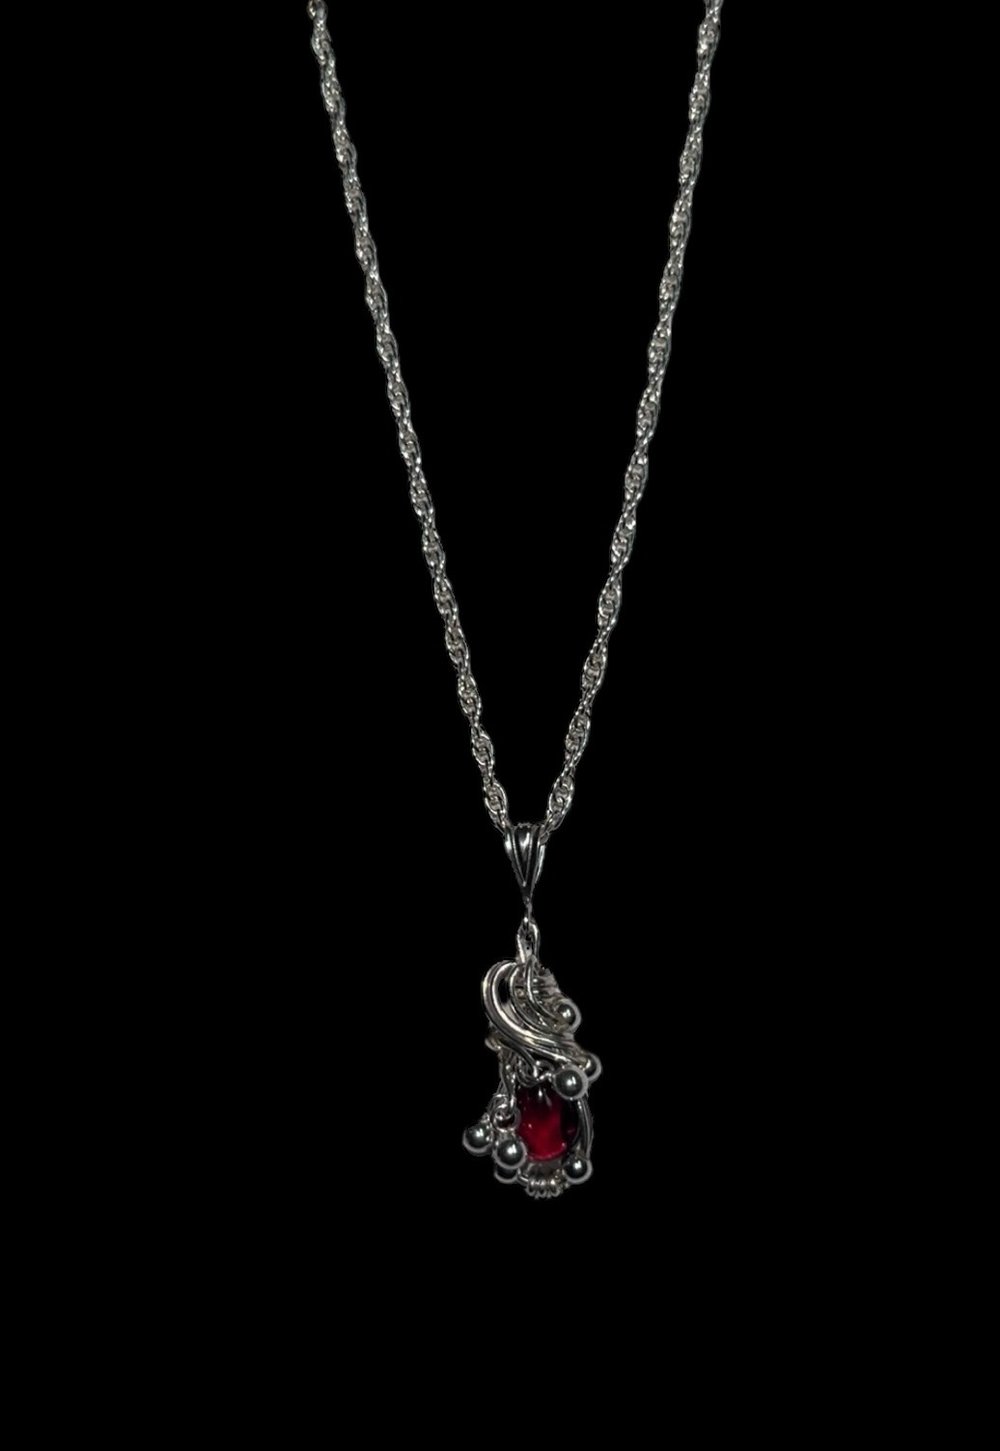 ⟢ Blood Necklace ⟣